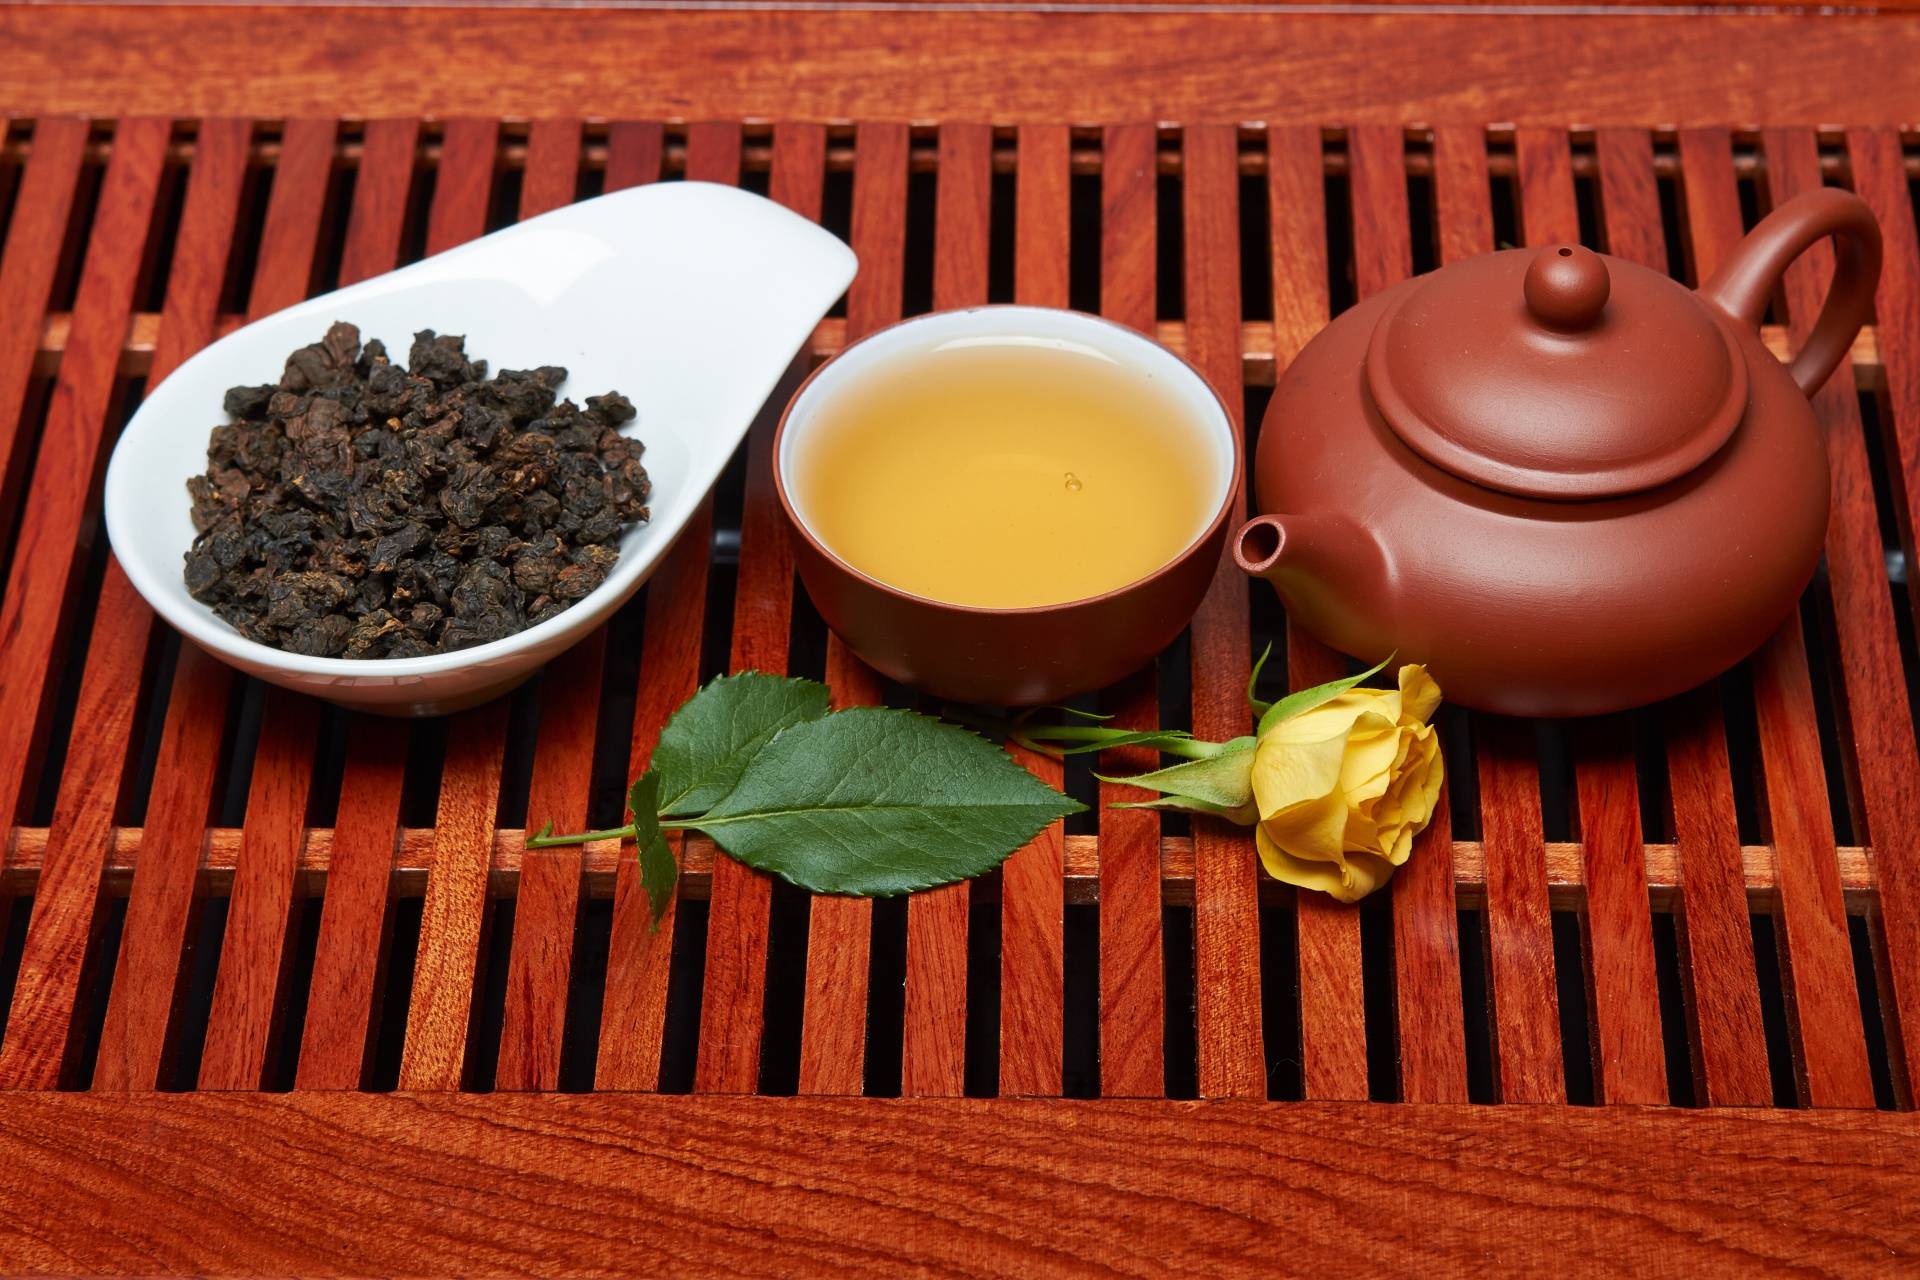 Алишань улун – тайваньский чай с изысканным вкусом